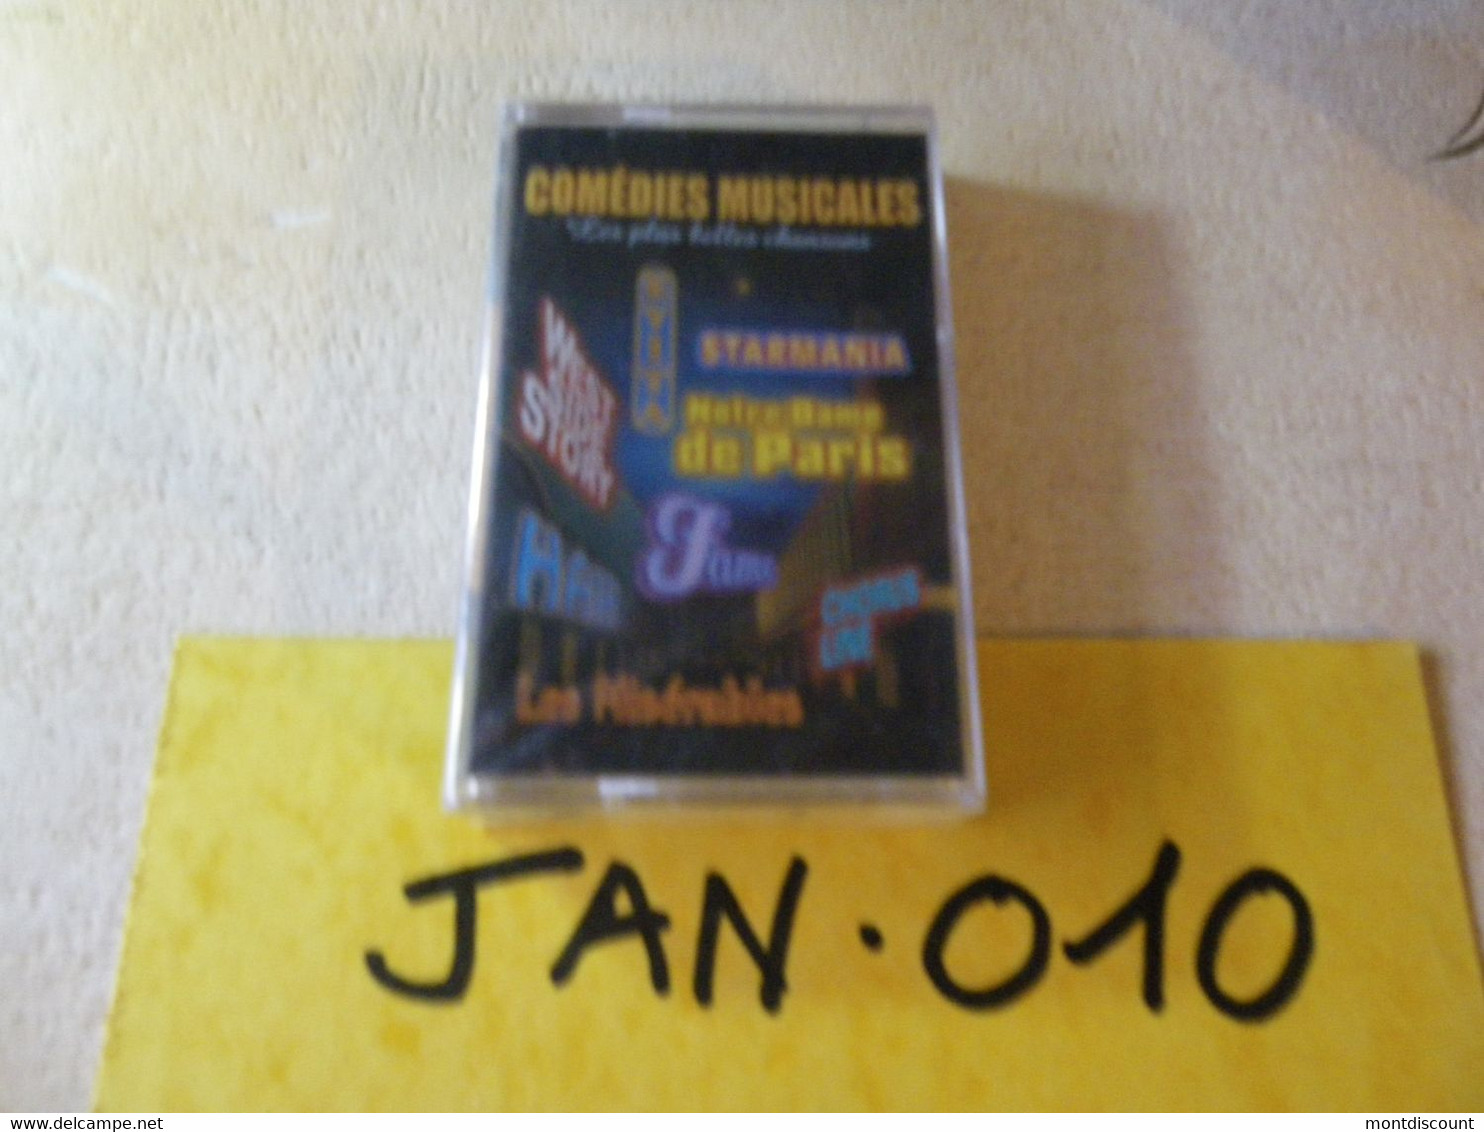 COMPILATION COMEDIES MUSICALES K7 AUDIO EMBALLE D'ORIGINE JAMAIS SERVIE... VOIR PHOTO... (JAN 010) - Audiokassetten